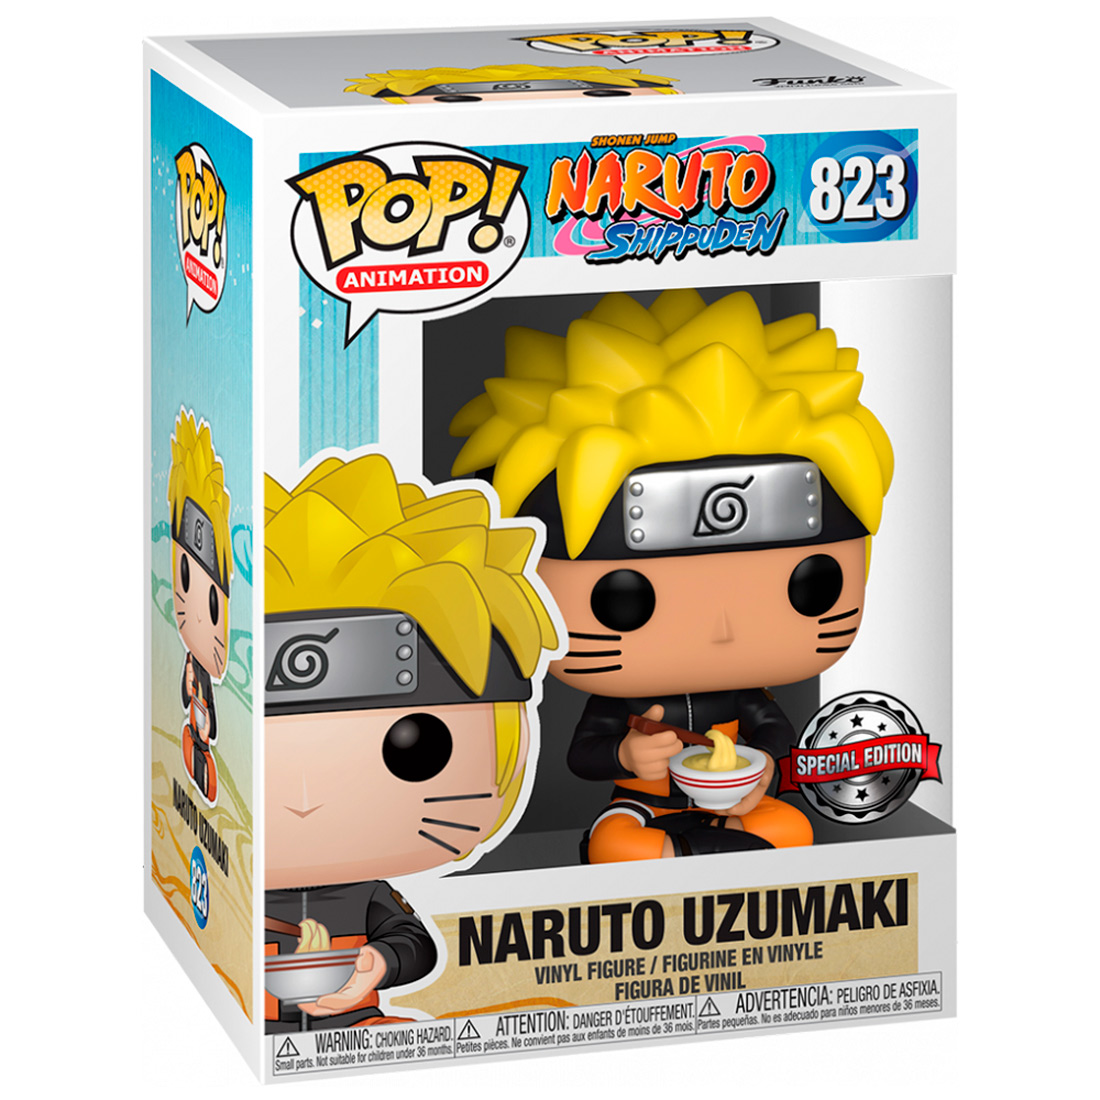 Pop! Animation - Naruto Shippuden - Naruto Uzumaki Special Edition #823 - Funko